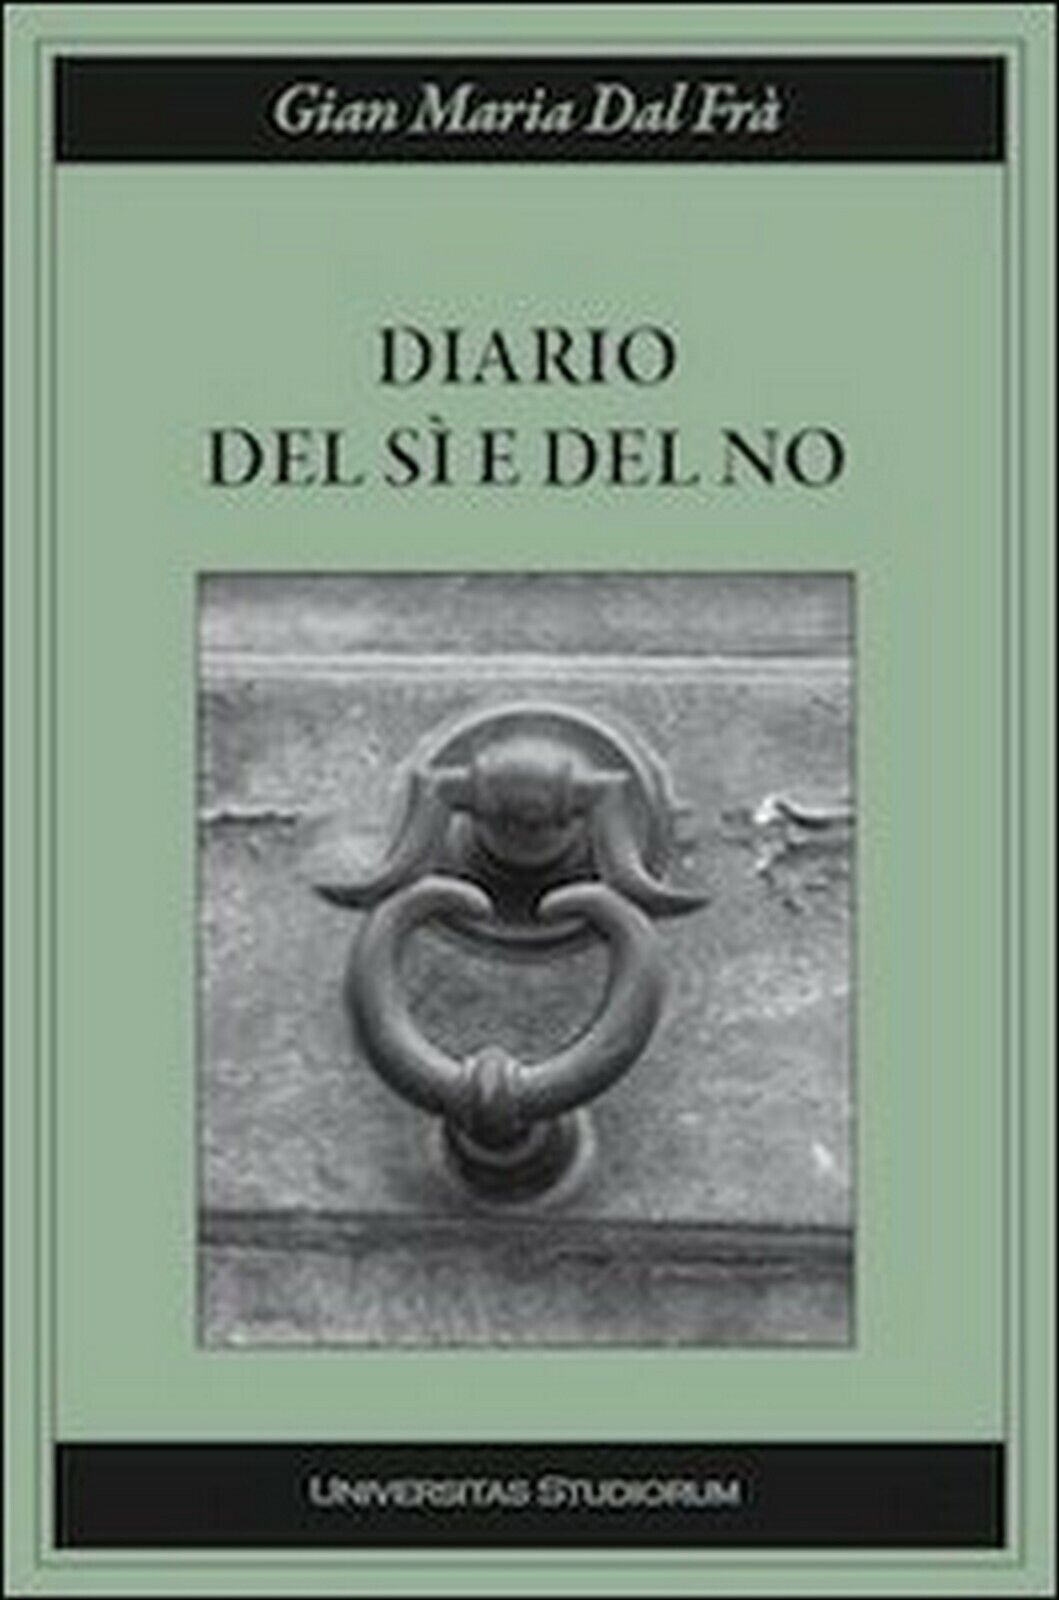 Diario del s? e del no  di G. Maria Dal Fr?,  2015,  Universitas Studiorum